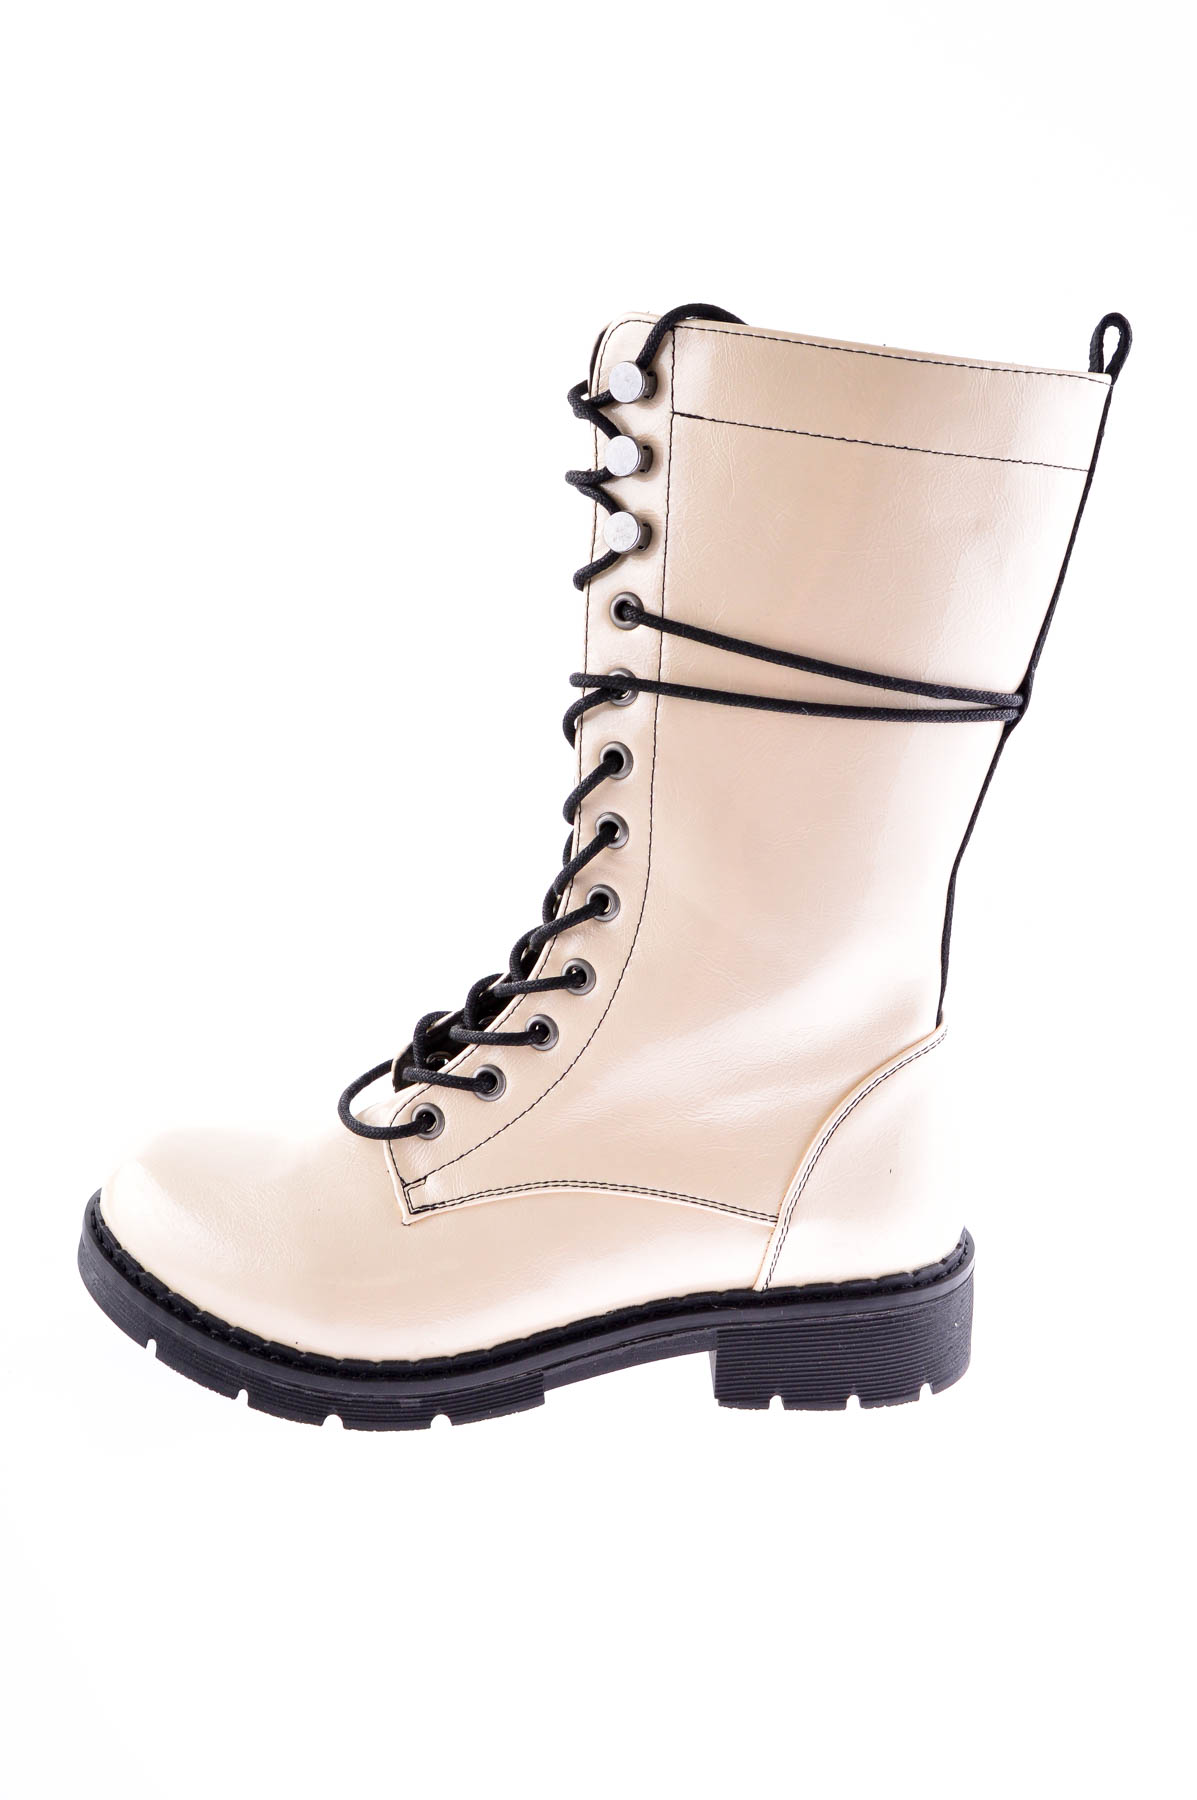 Women's boots - Super Cracks - 0